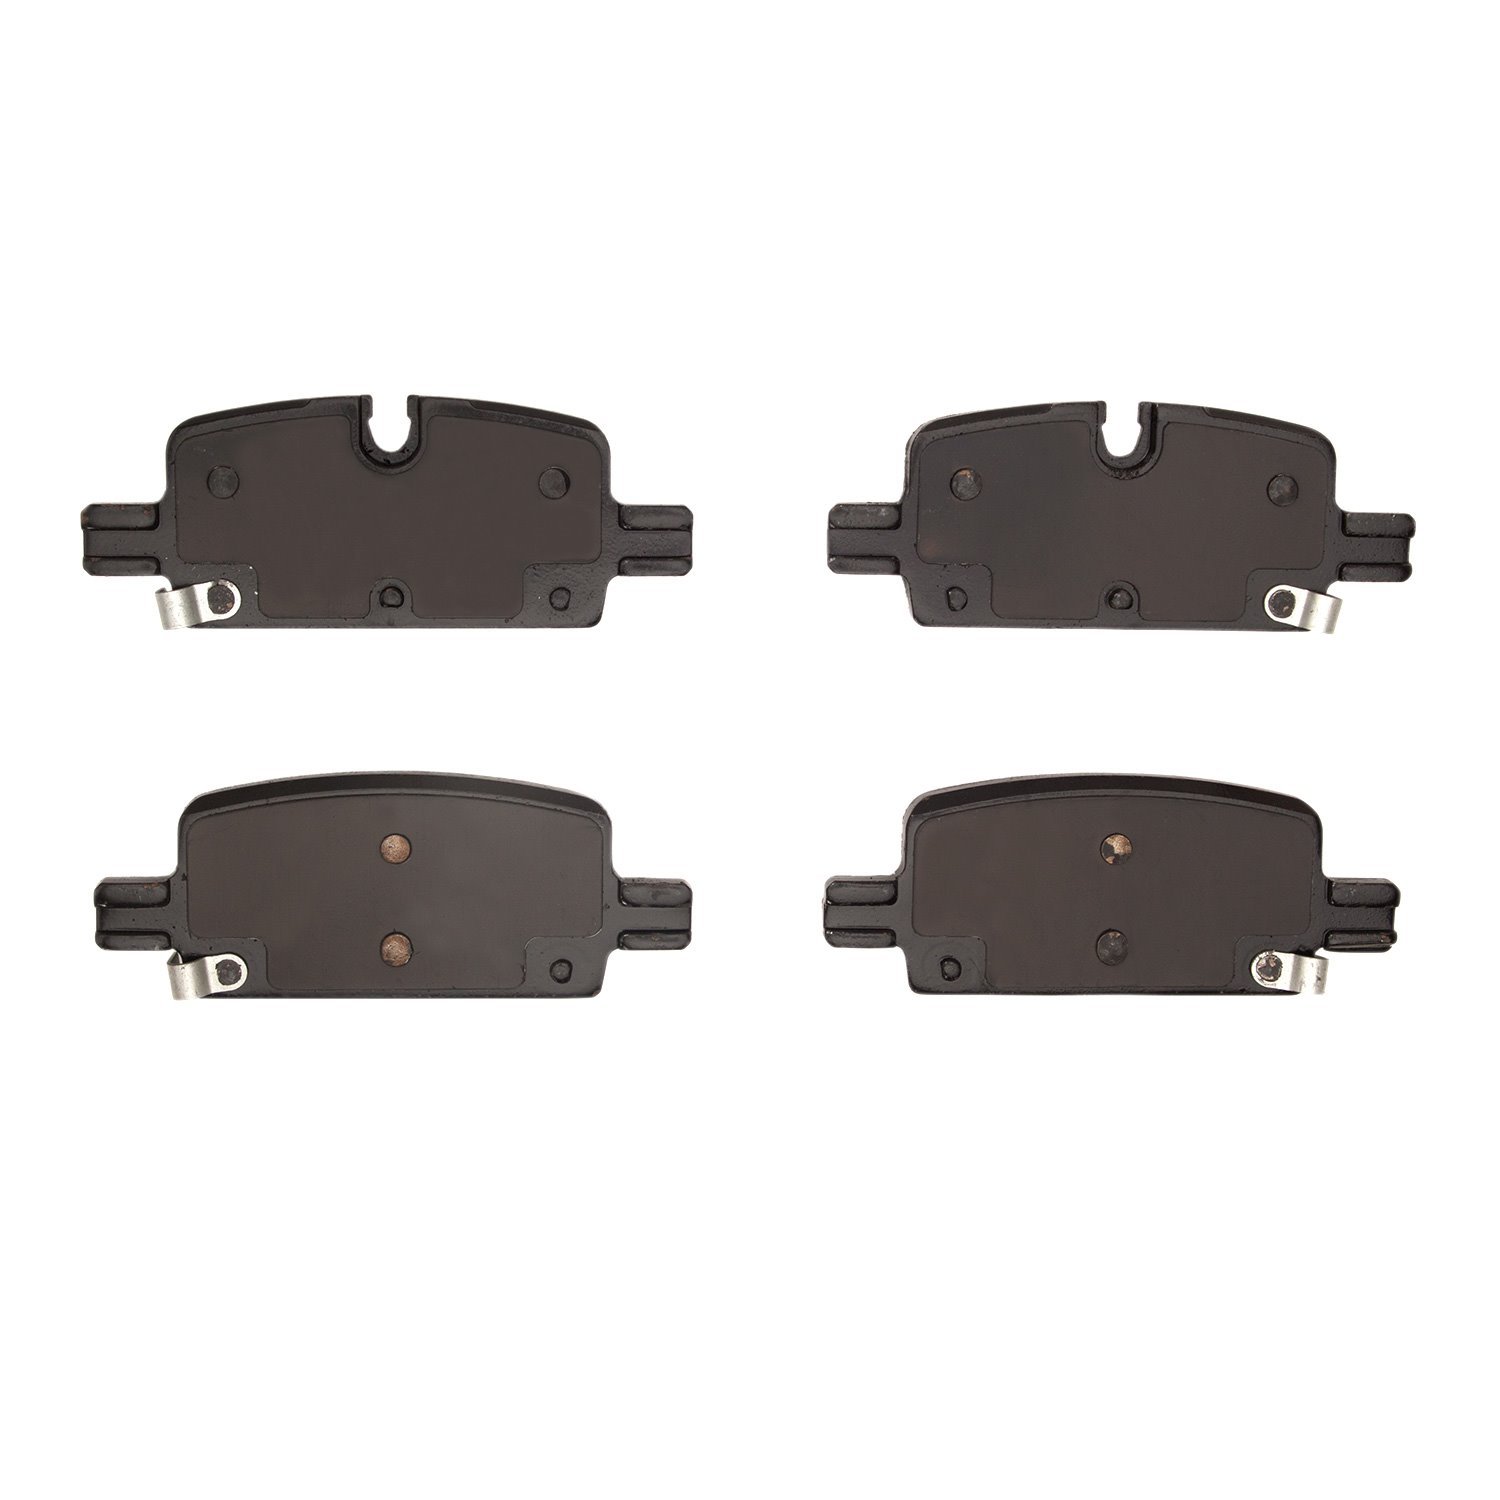 1400-2174-00 Ultimate-Duty Brake Pads Kit, Fits Select Multiple Makes/Models, Position: Rear,Rr